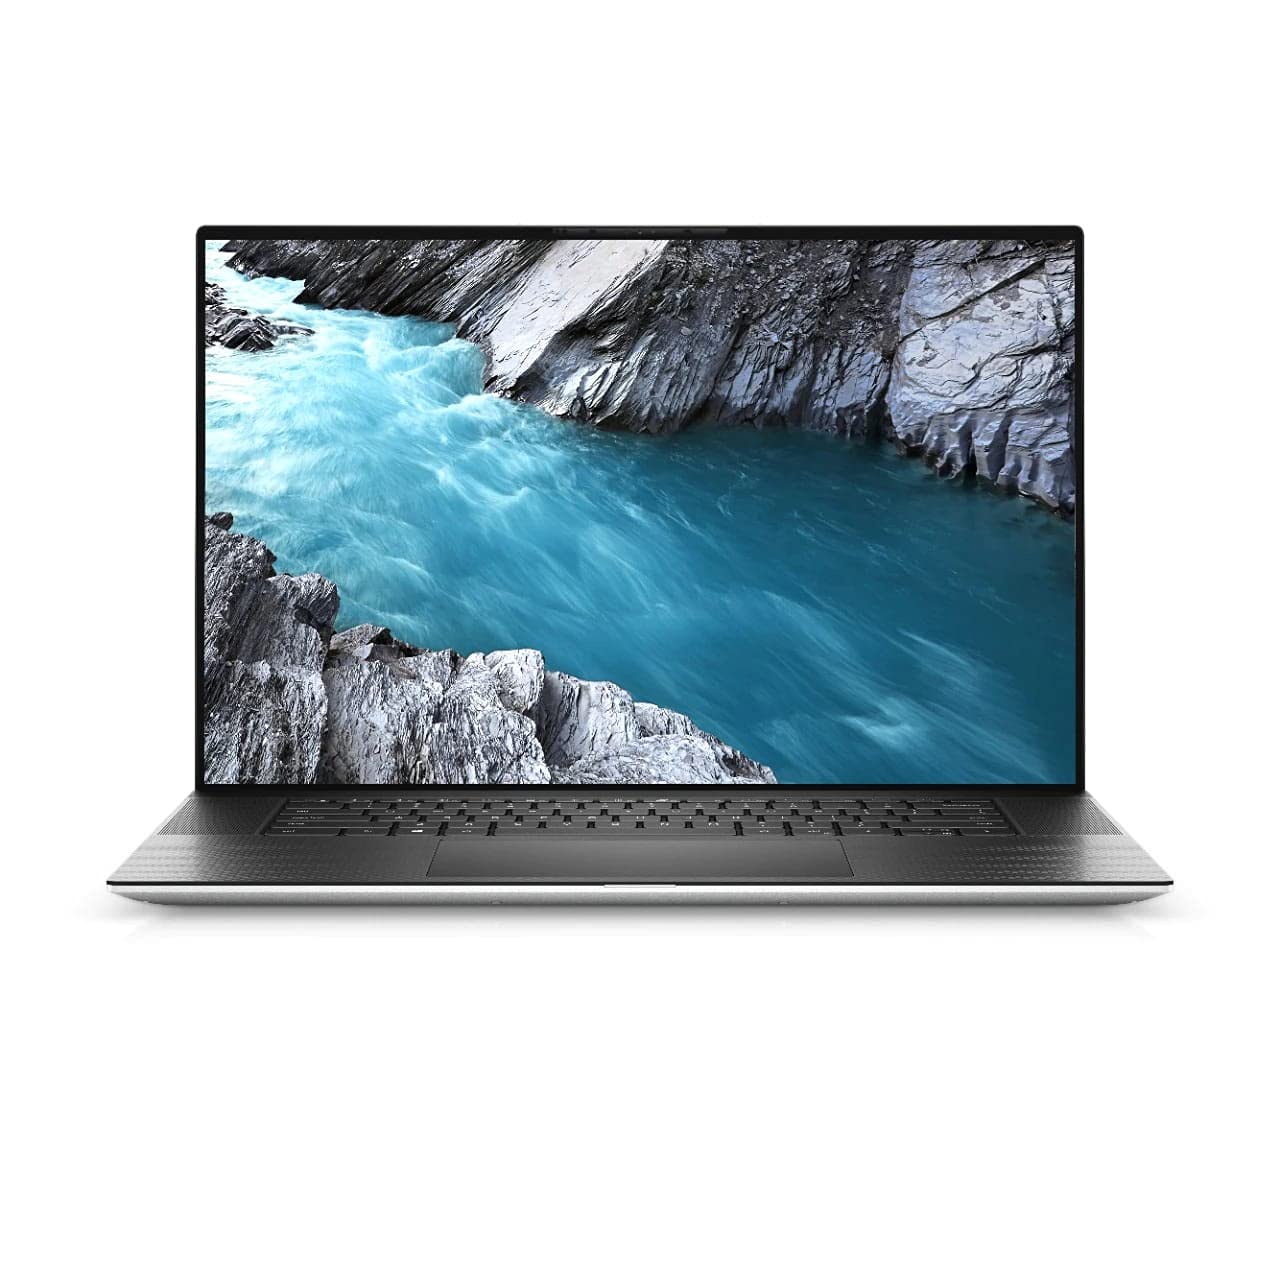 2020 Dell XPS 9700 Laptop 17